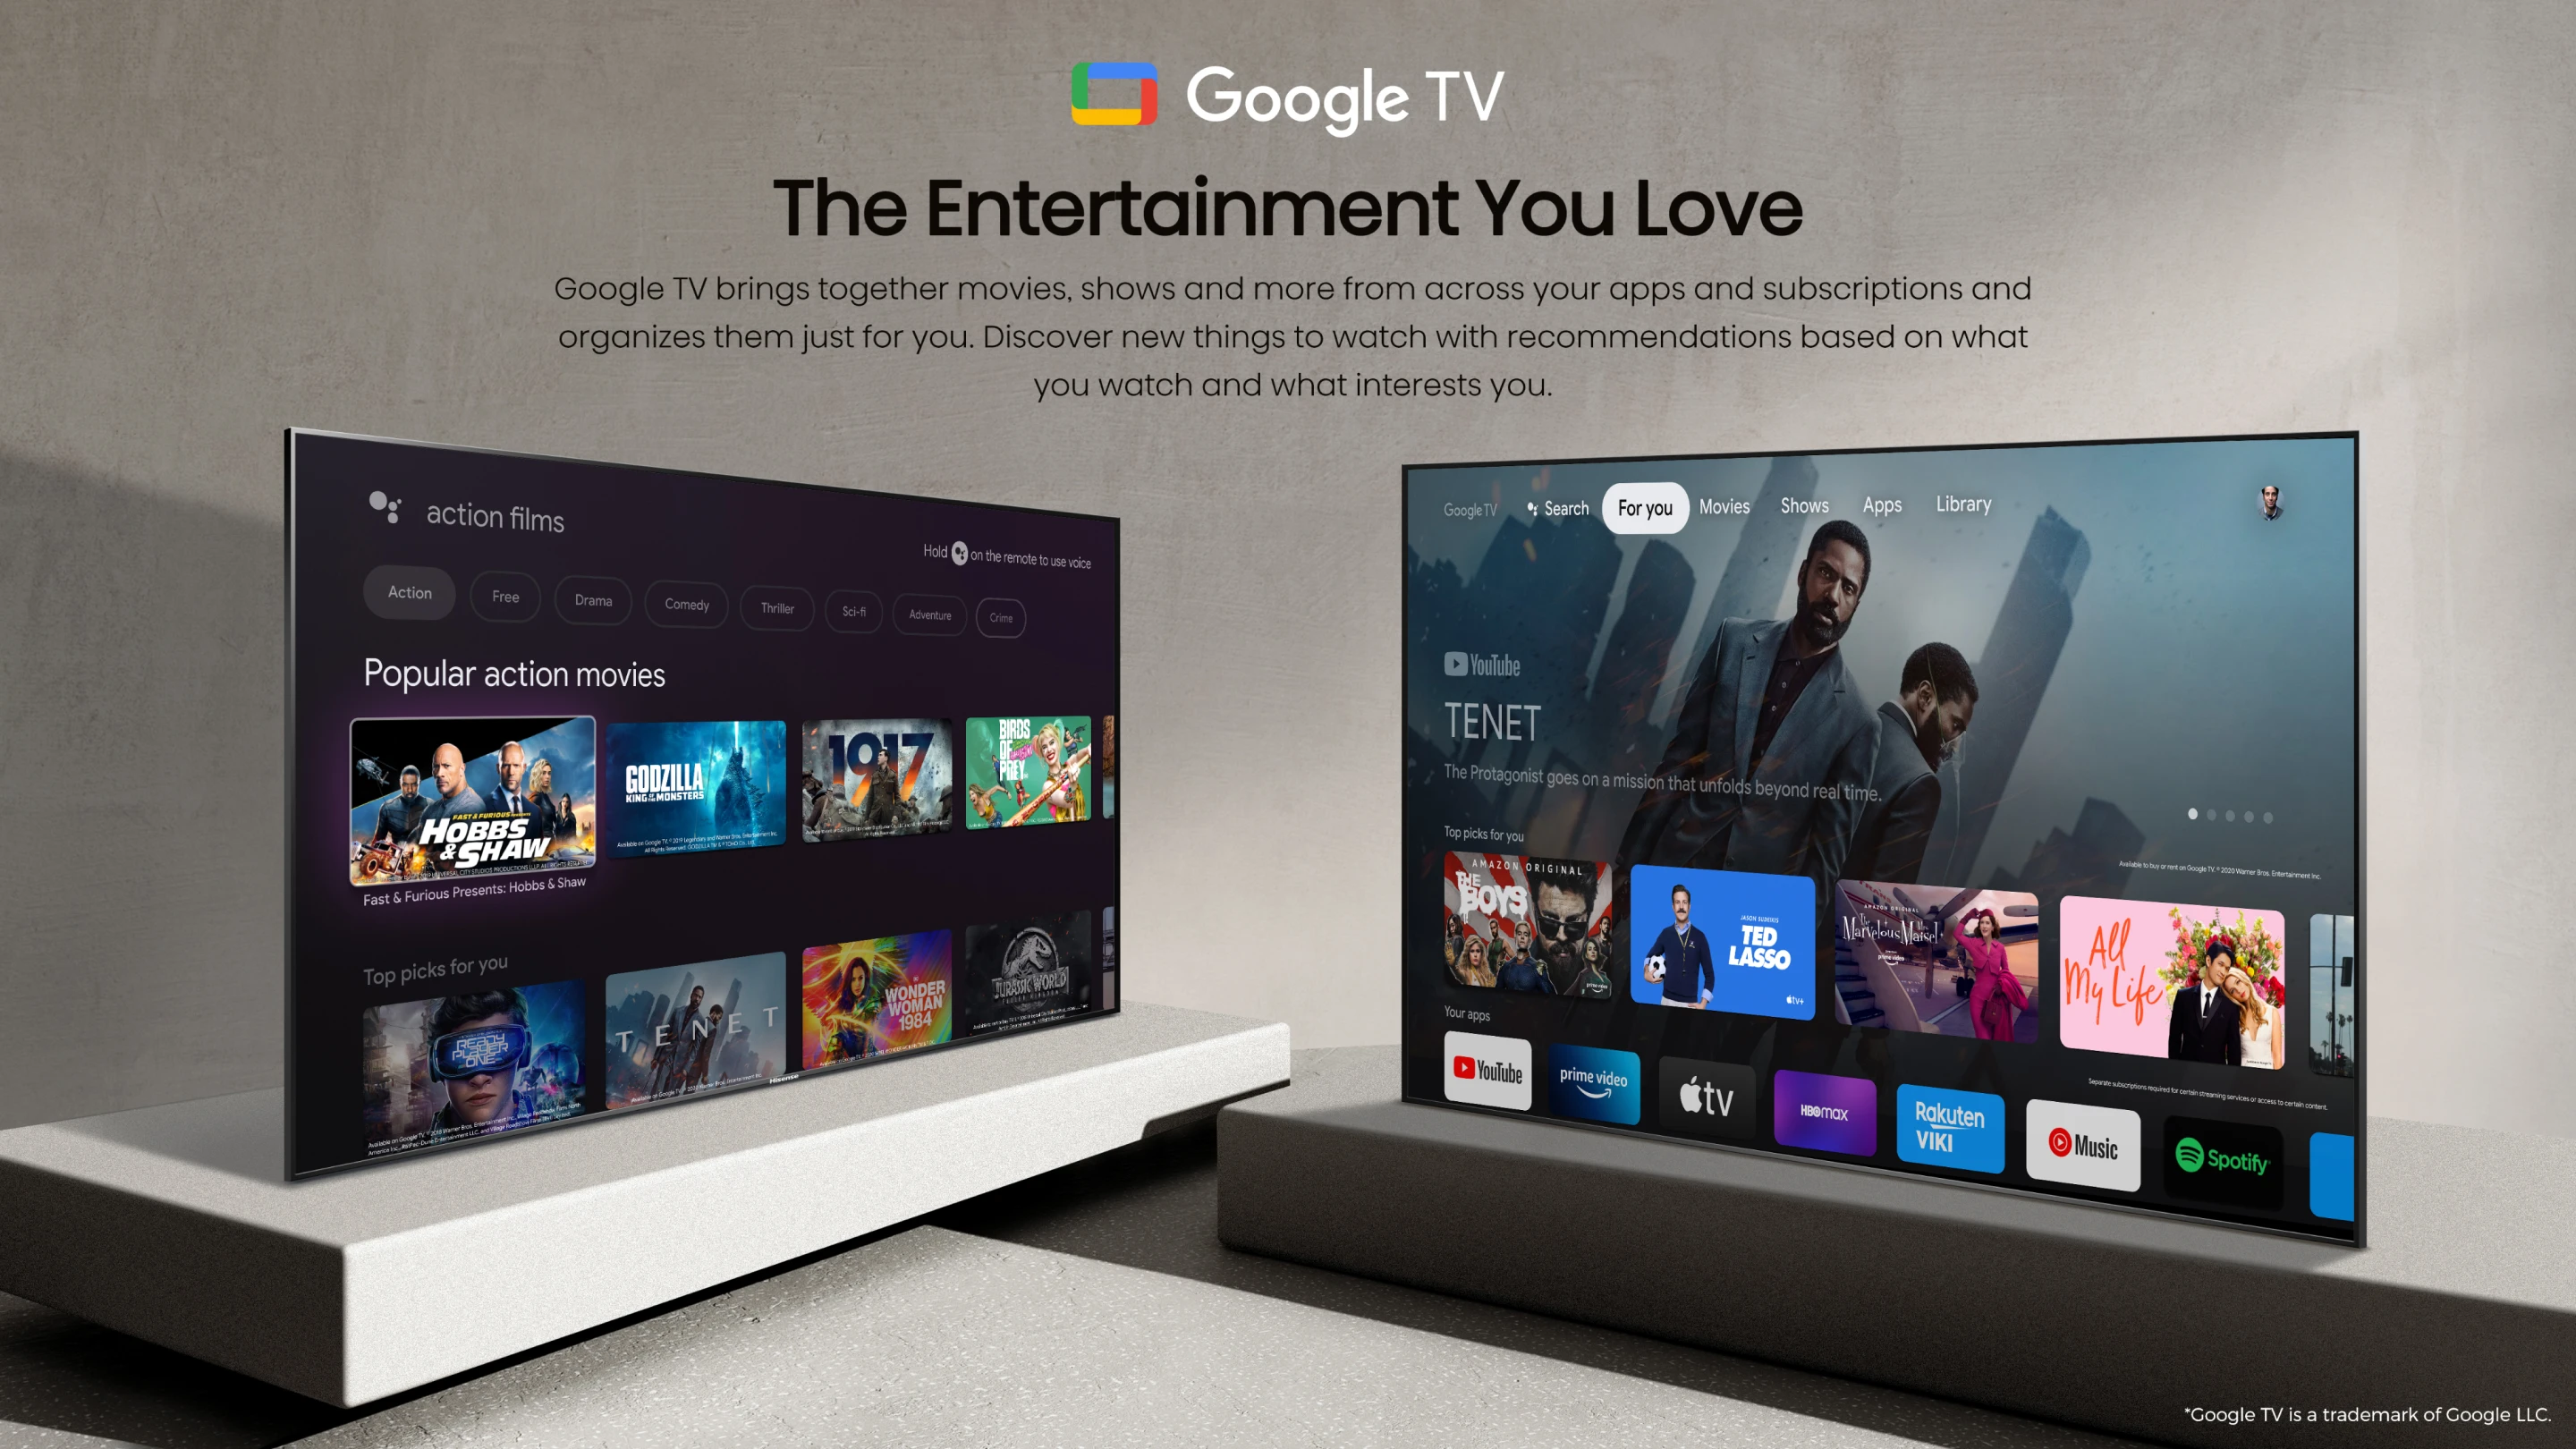 Hisense - Smart TV compatible con Alexa ULED prémium, 65 pulgadas, clase  U8G, serie Quantum, Android TV, 4K (modelo 65U8G de 2021)